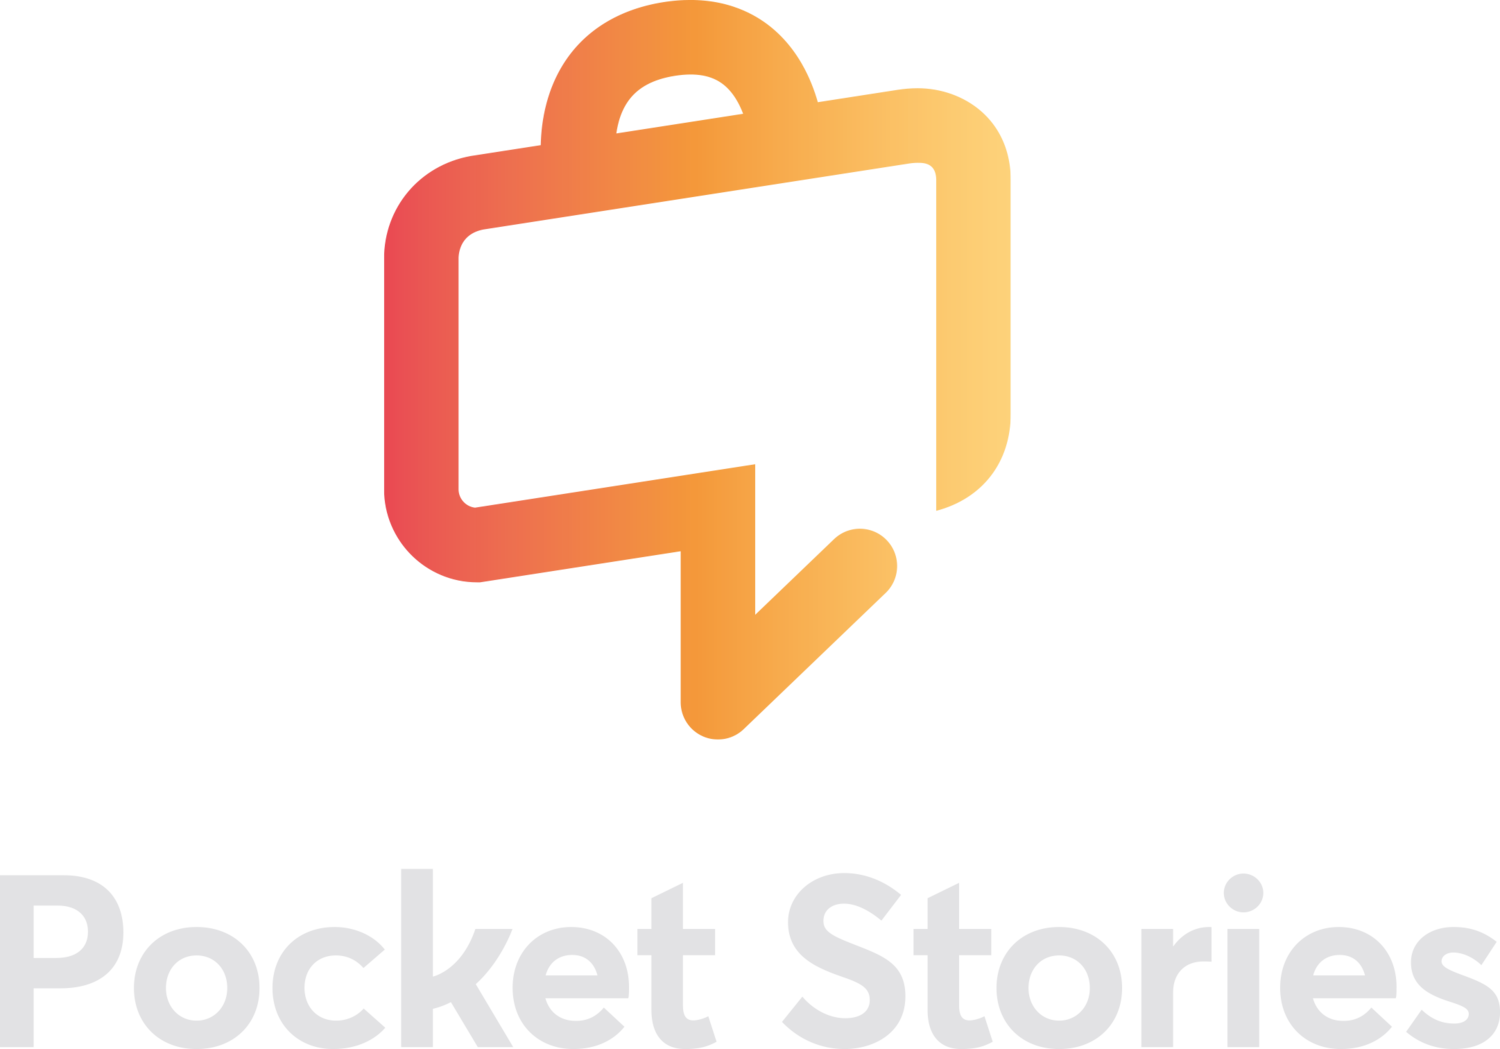 Pocket Stories